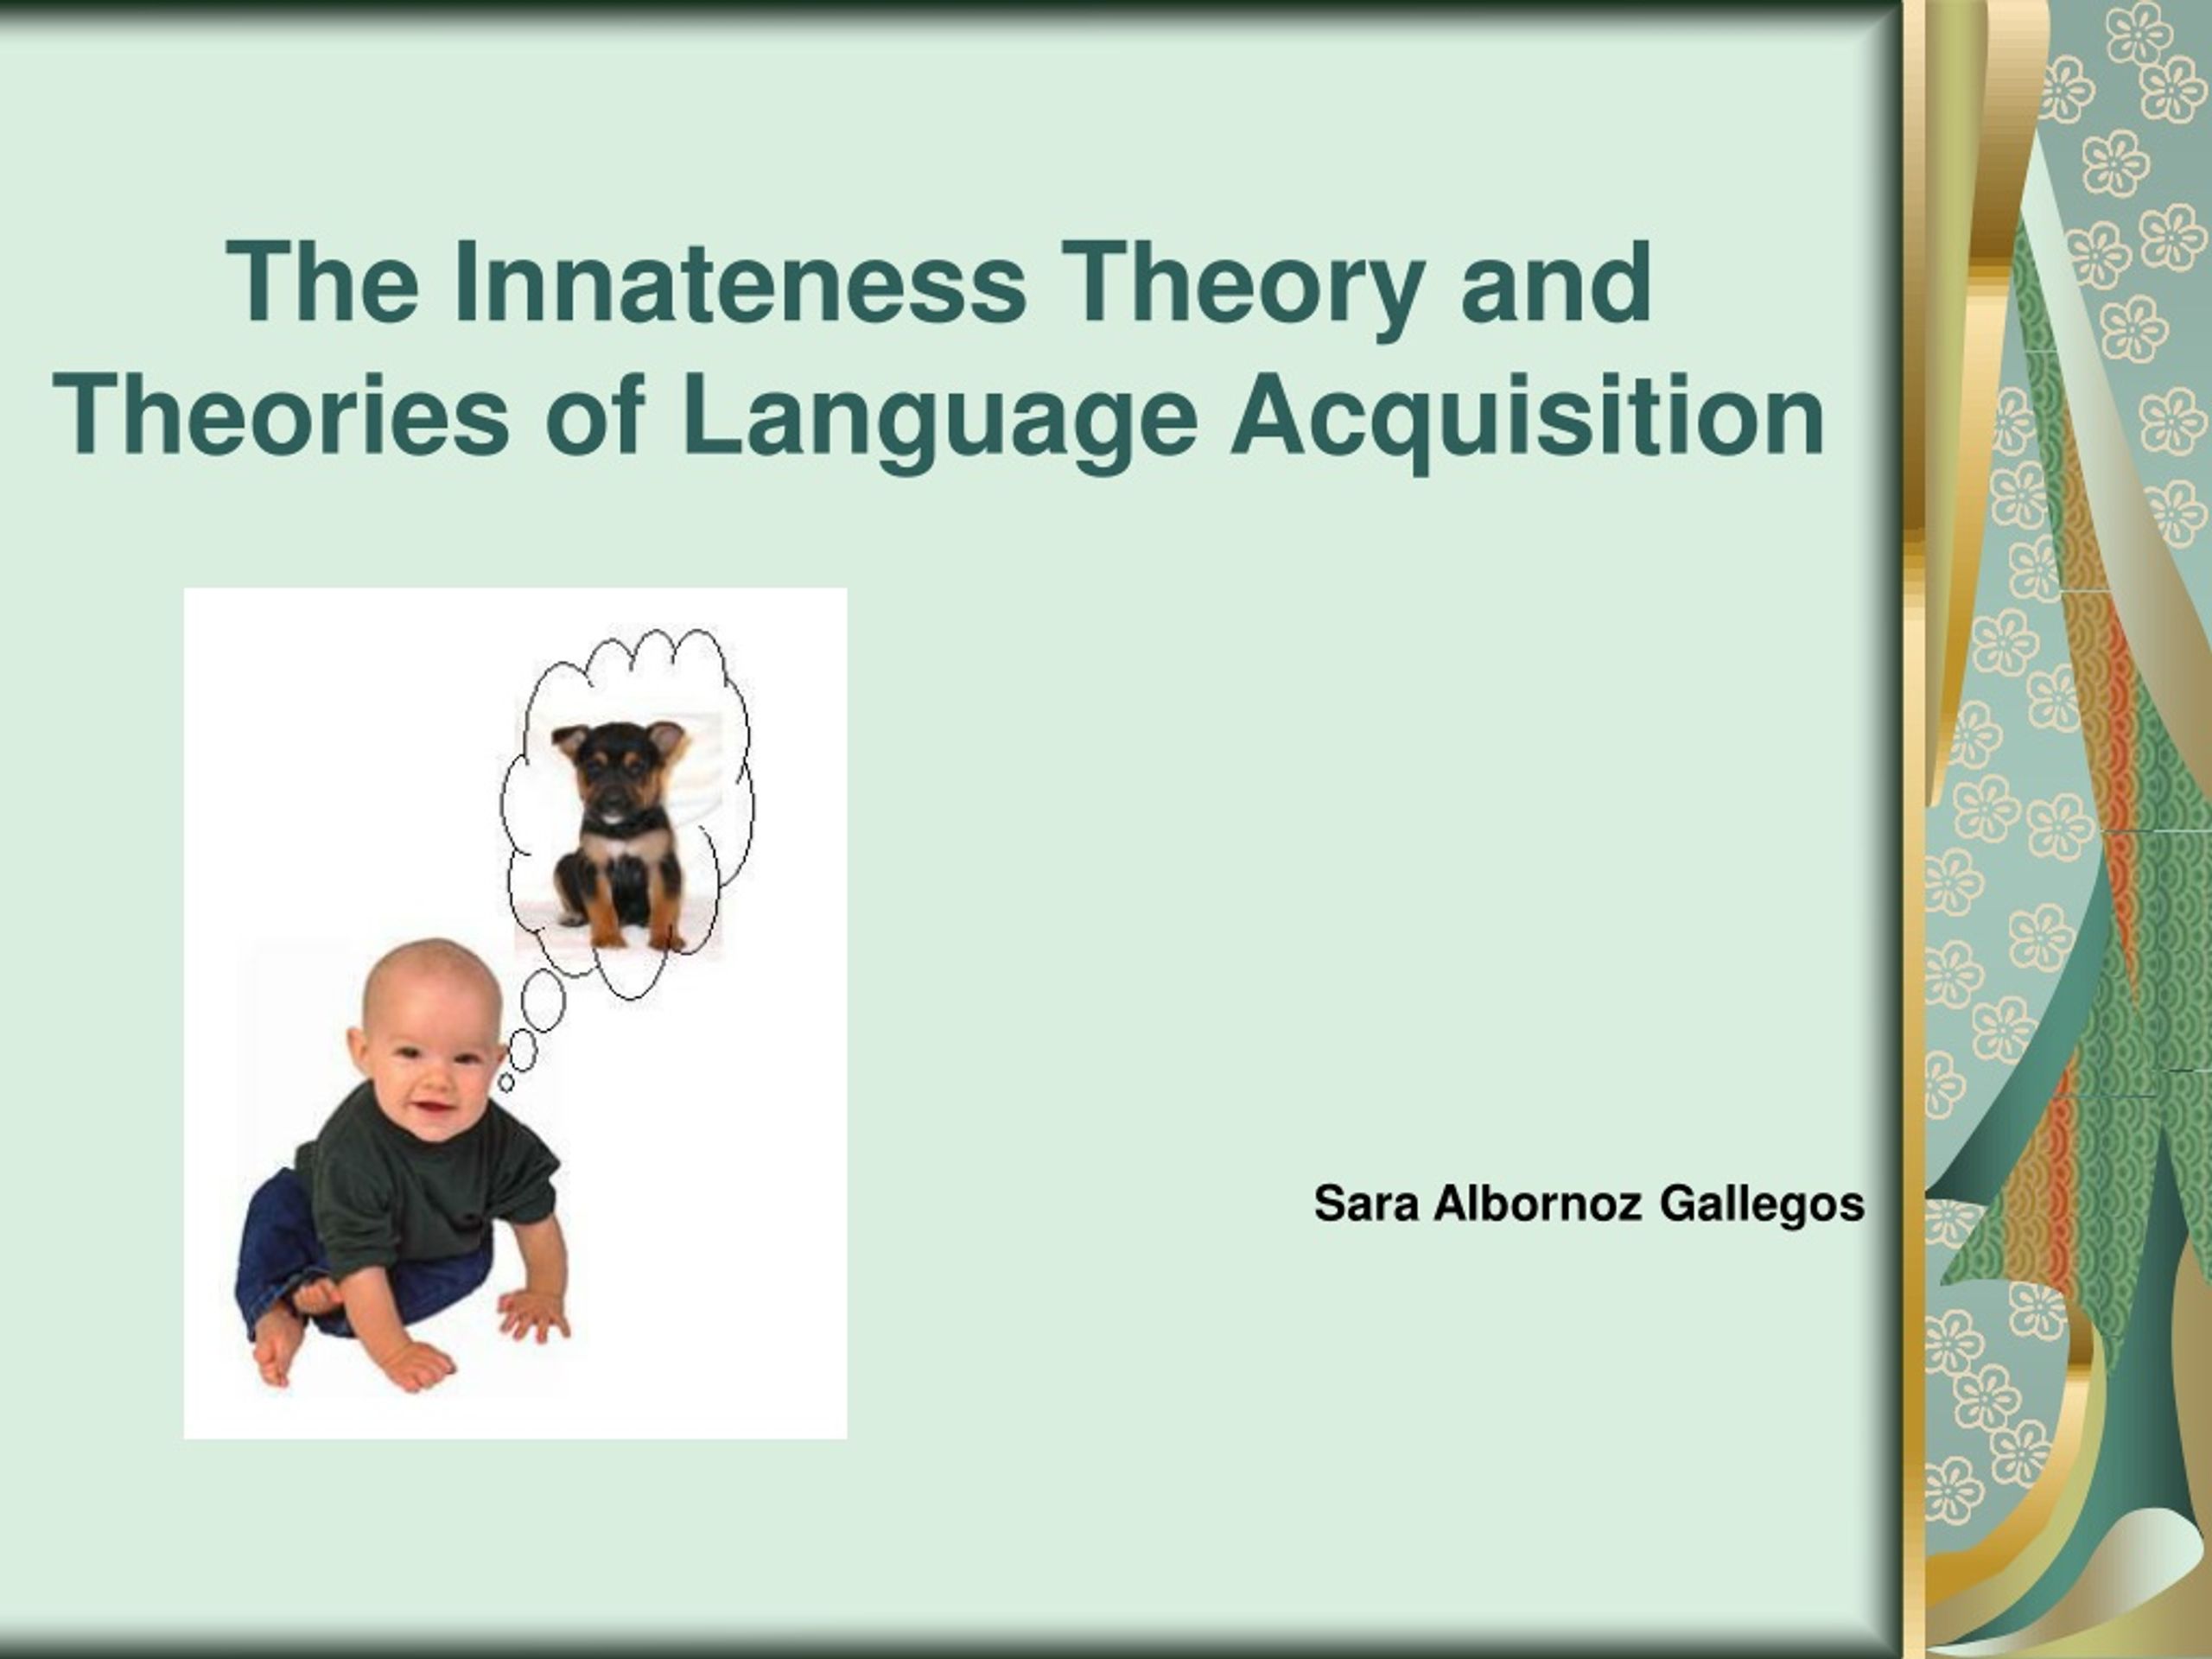 presentation on language acquisition